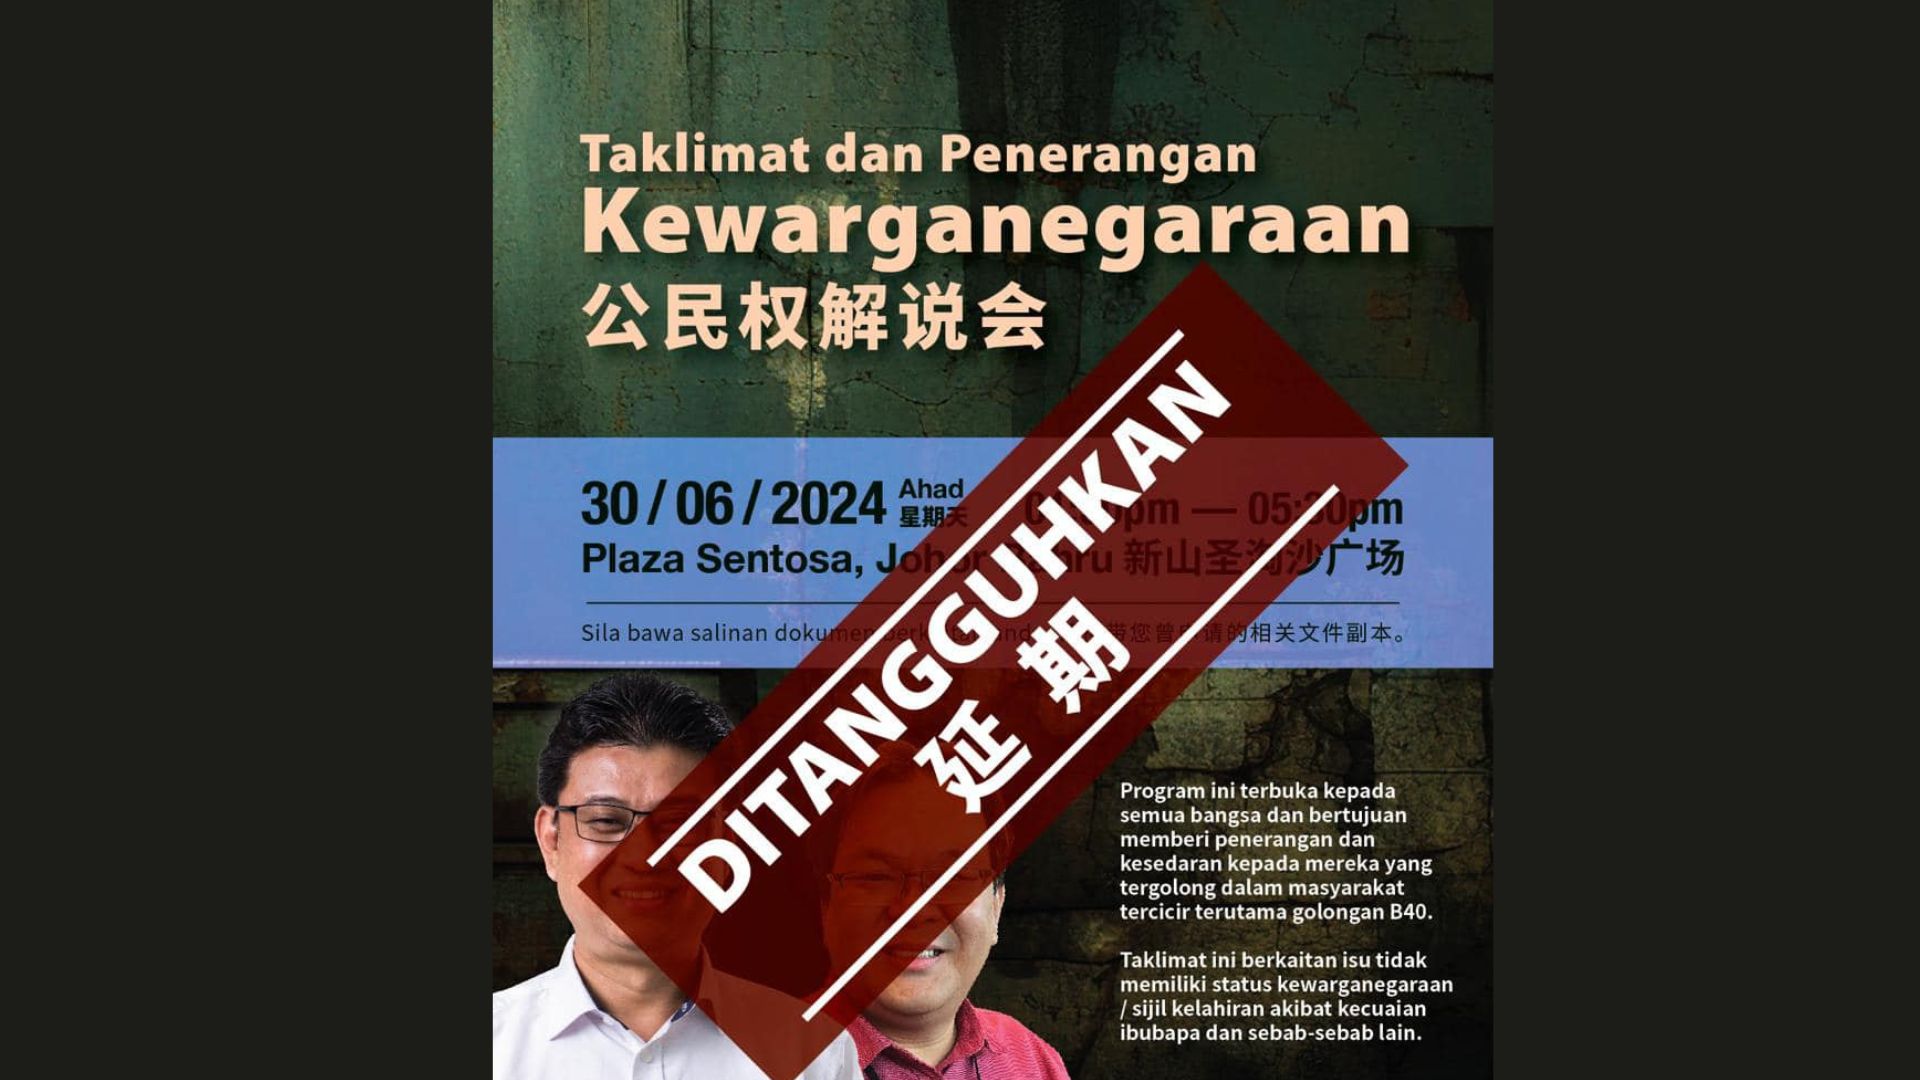 Stulang rep's citizenship briefing postponed after intense criticism